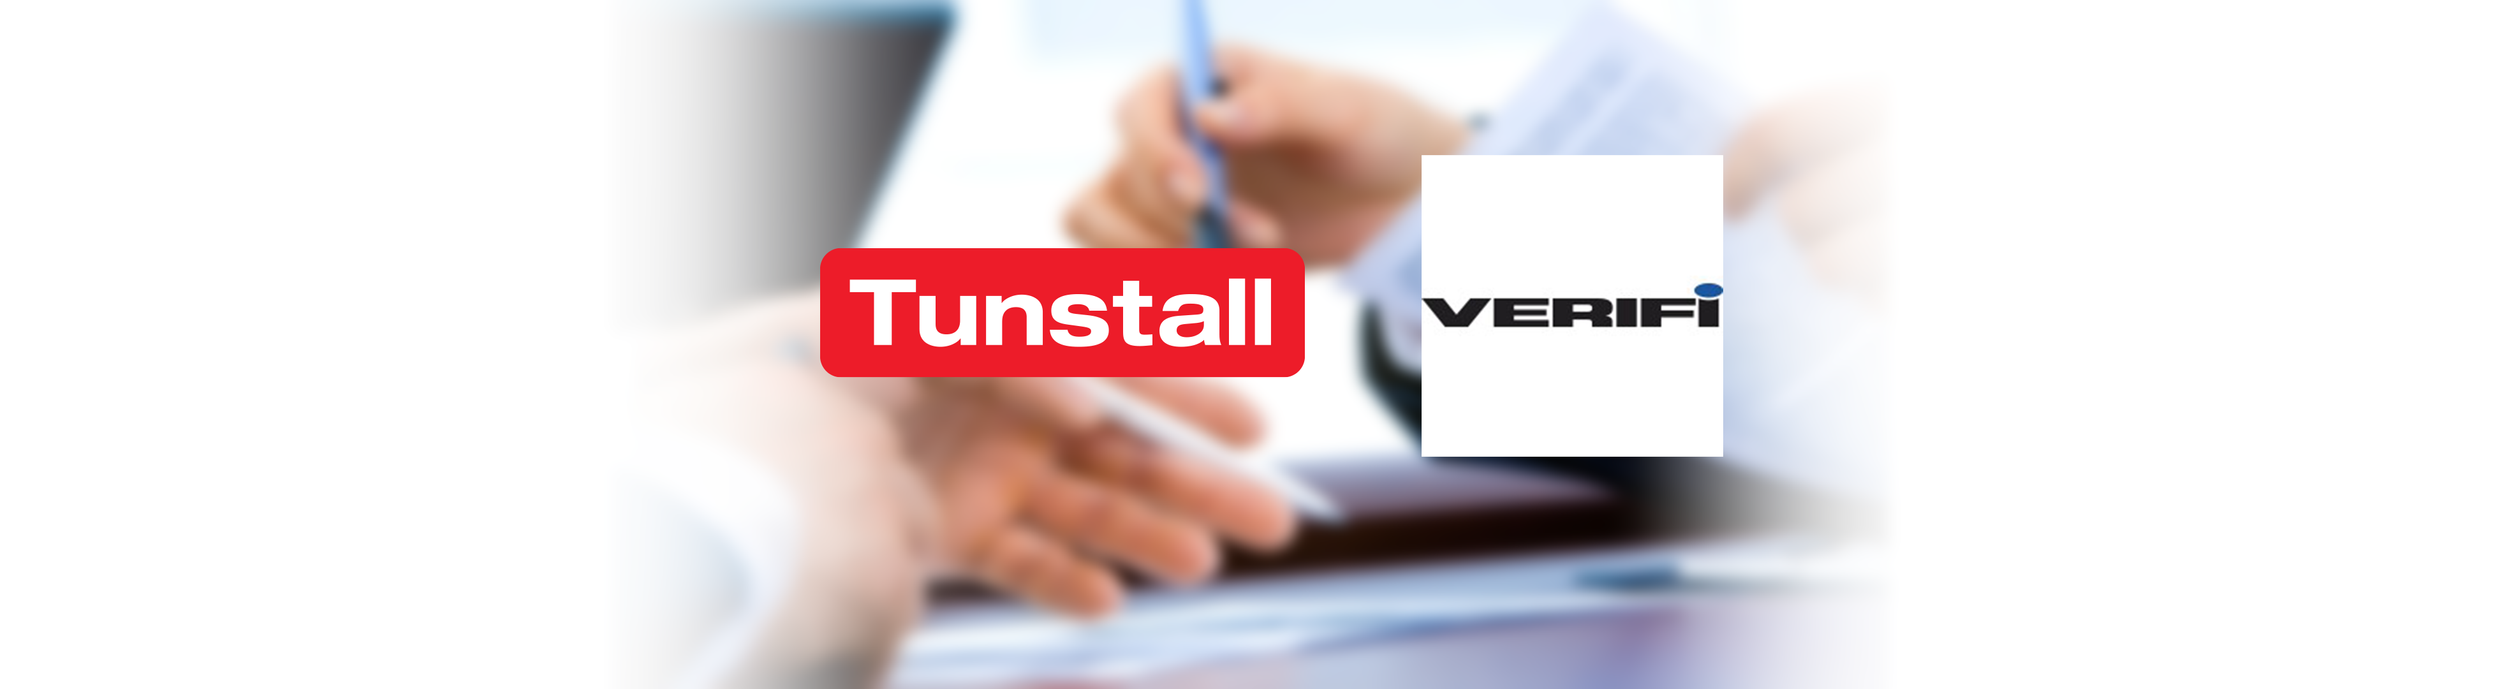 Press Releases Tunstall Healthcare